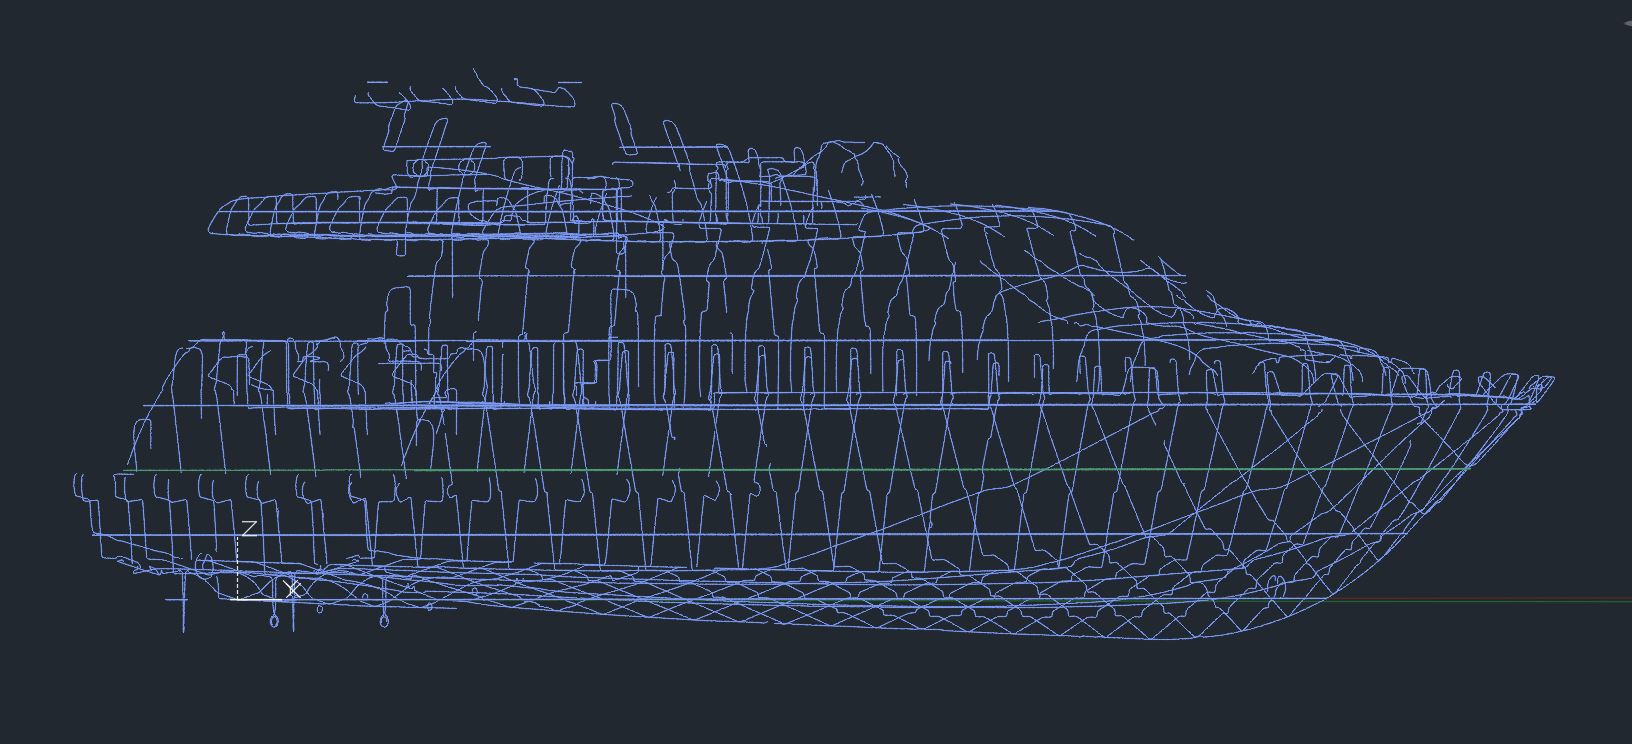 Deformation Monitoring / Yacht